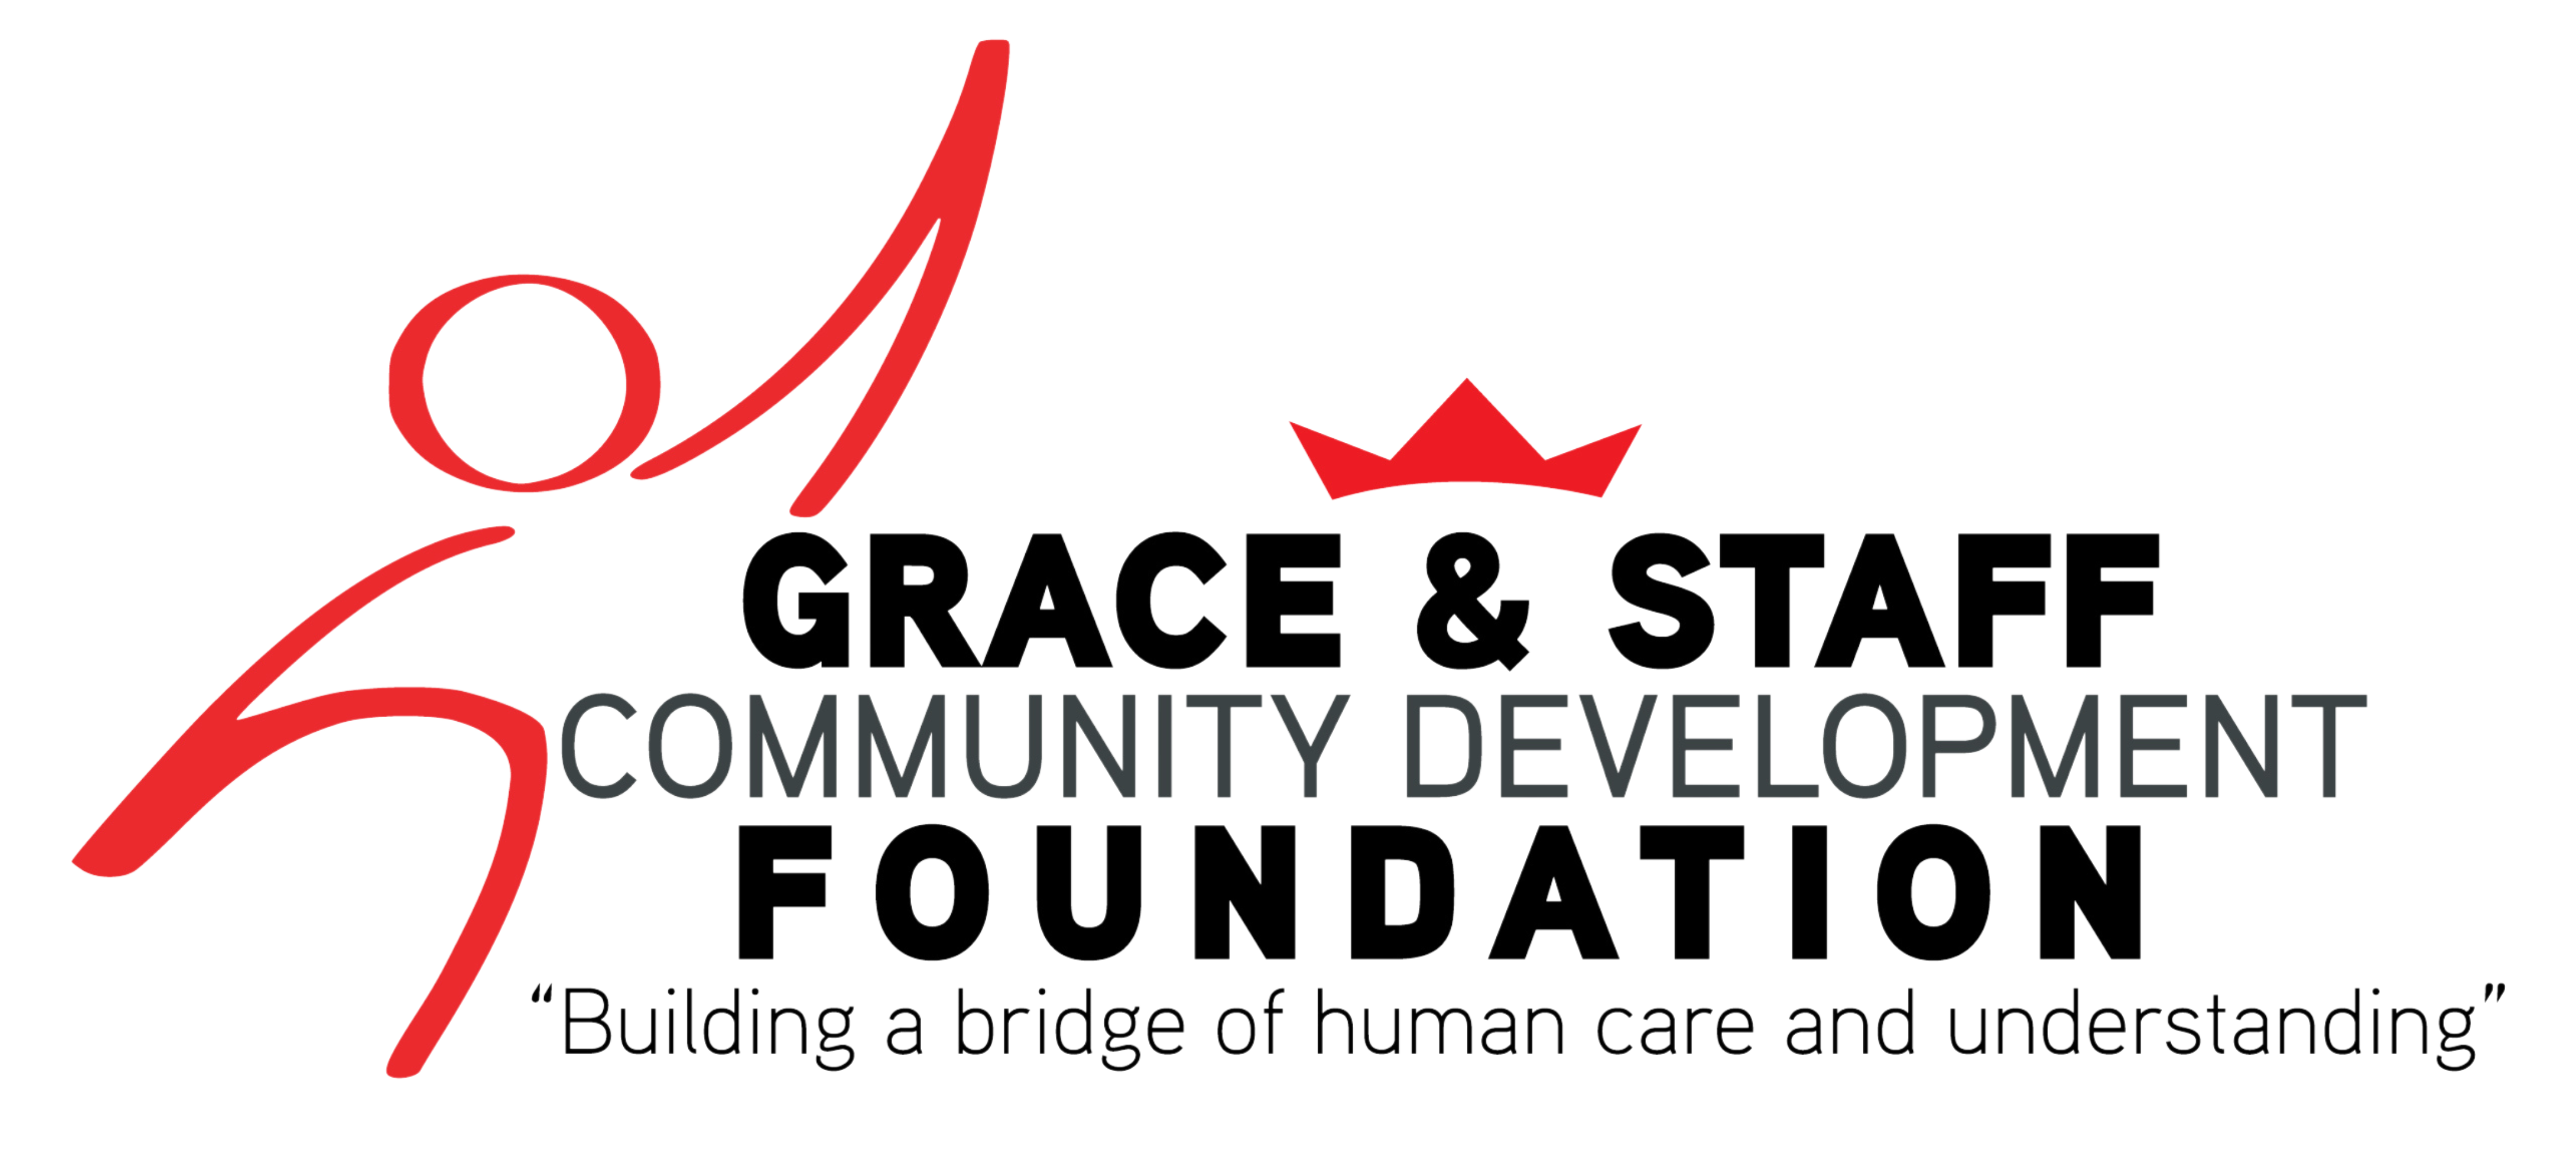 GRACE & STAFF COMMUNITY DEVELOPMENT FOUNDATION